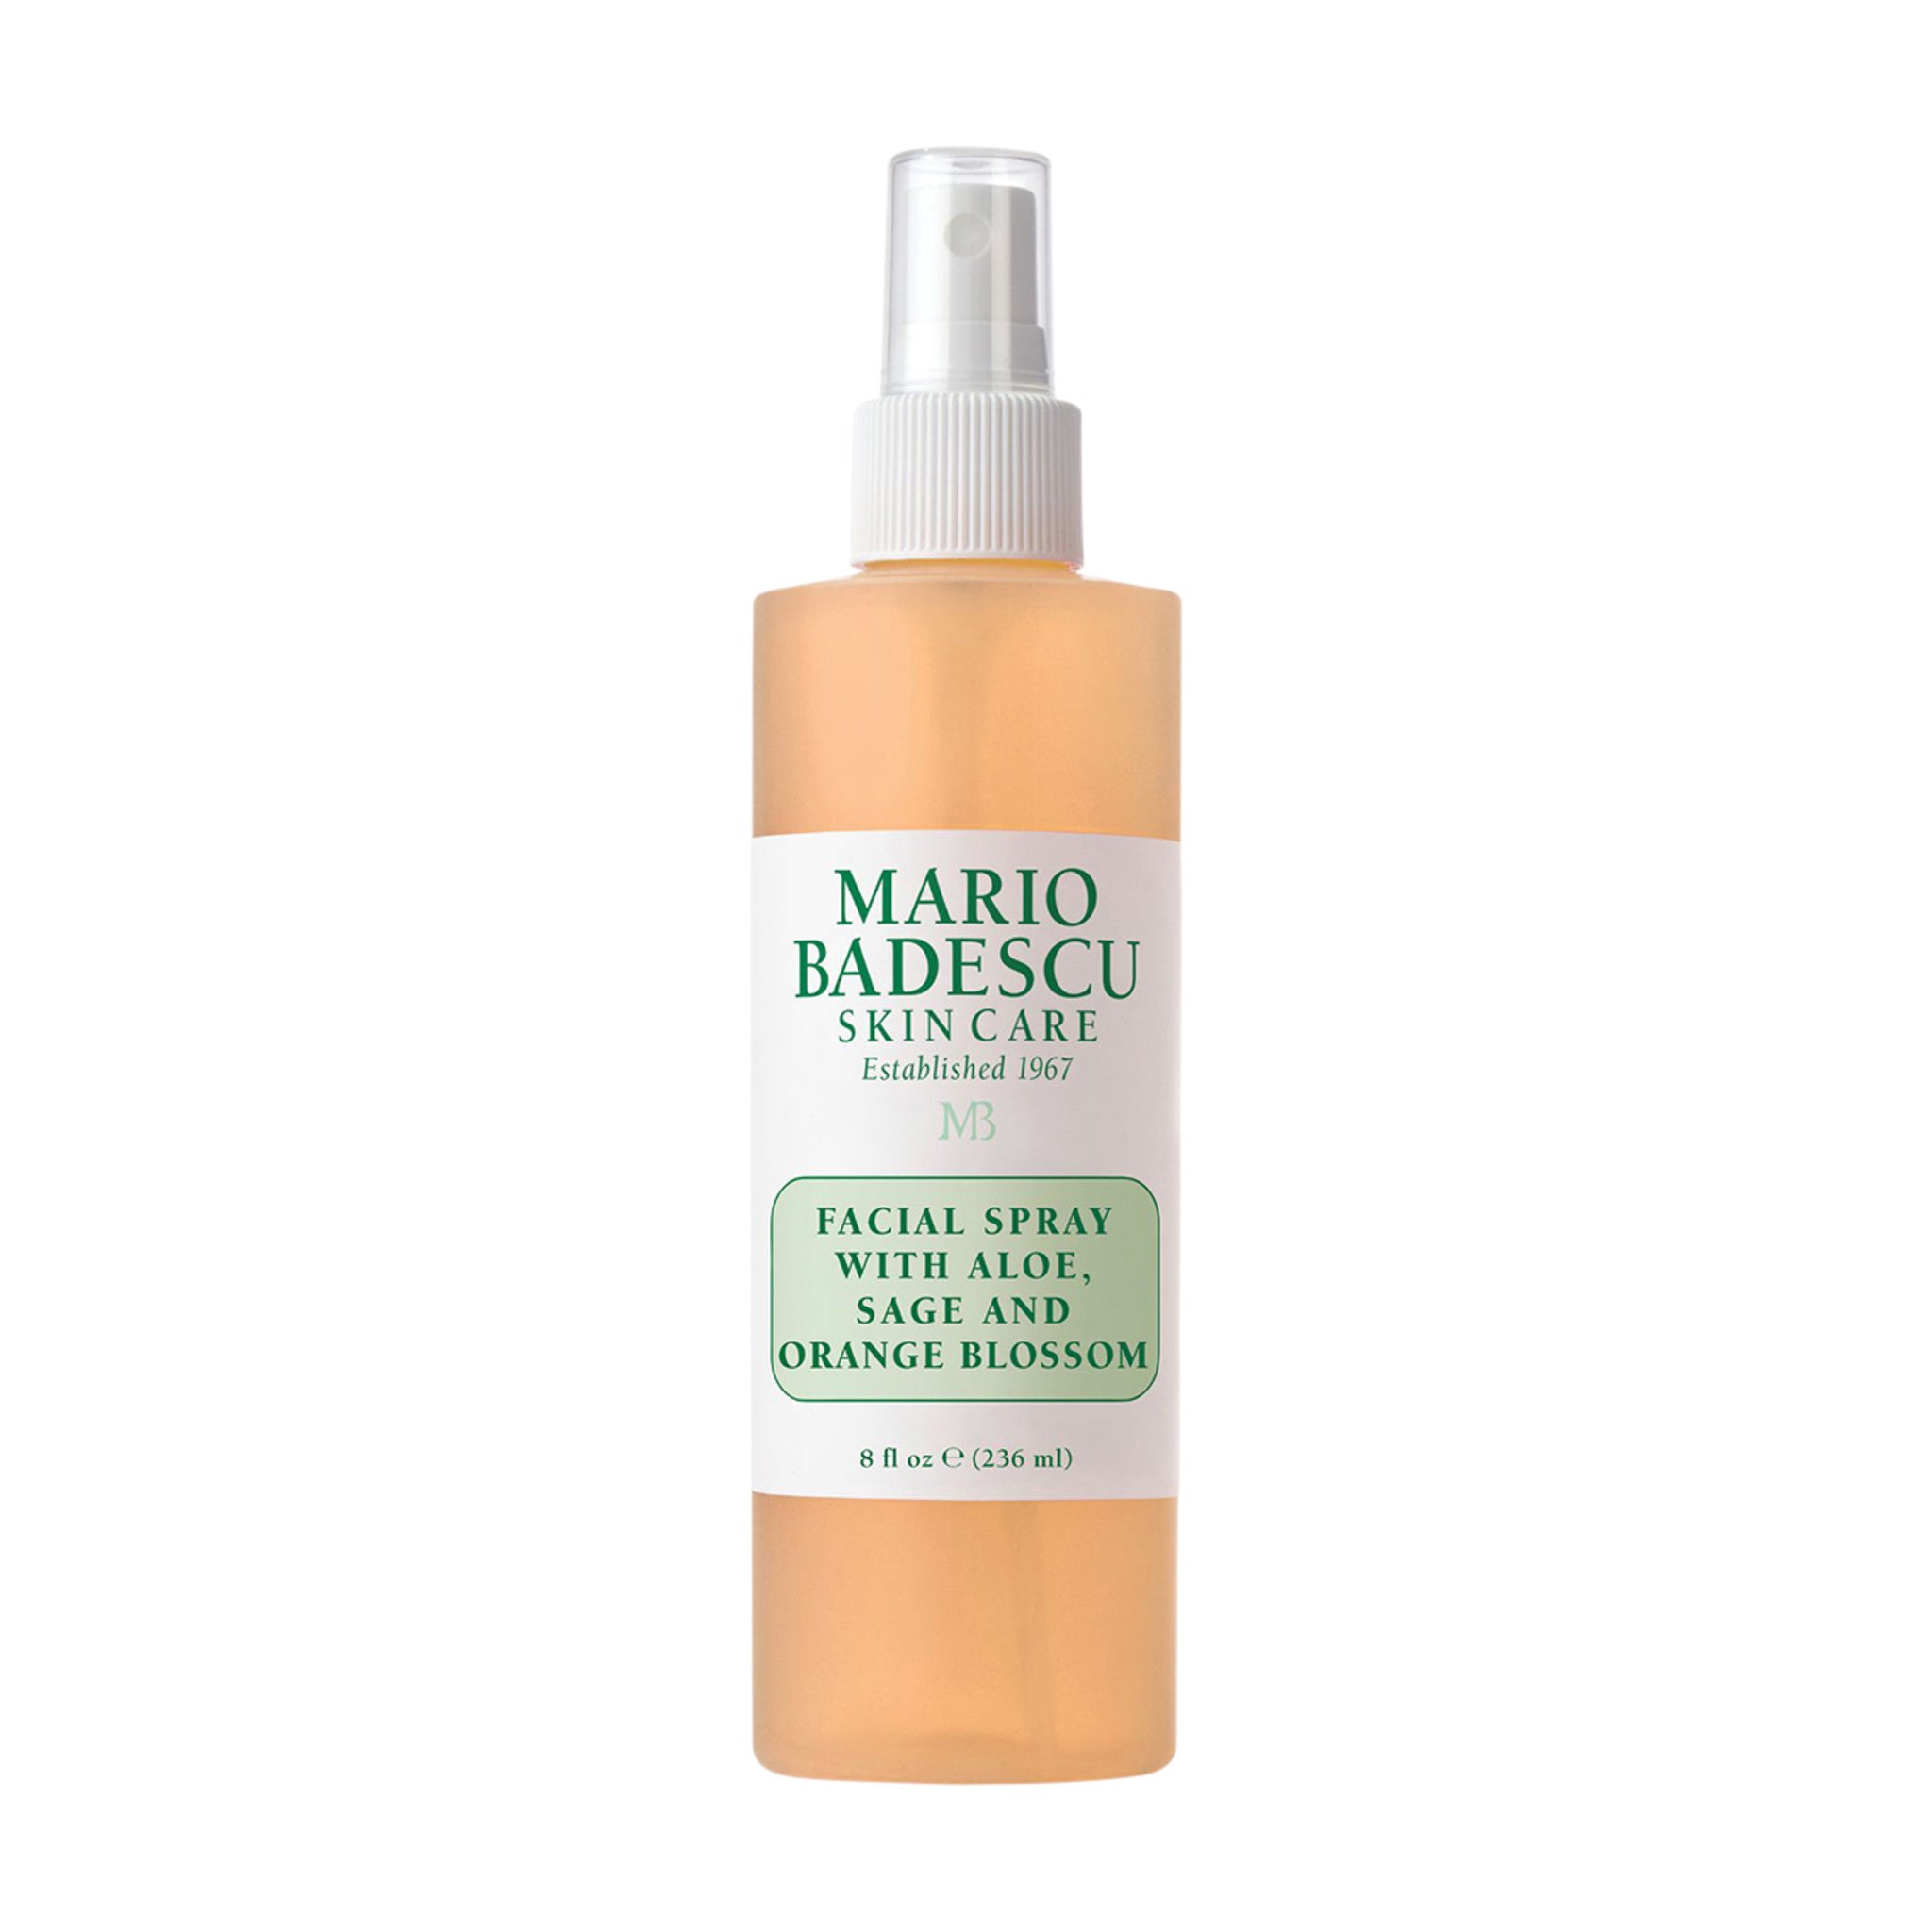 Mario Badescu Facial Spray With Aloe, Sage and Orange Blossom Size variant: 8oz main image.